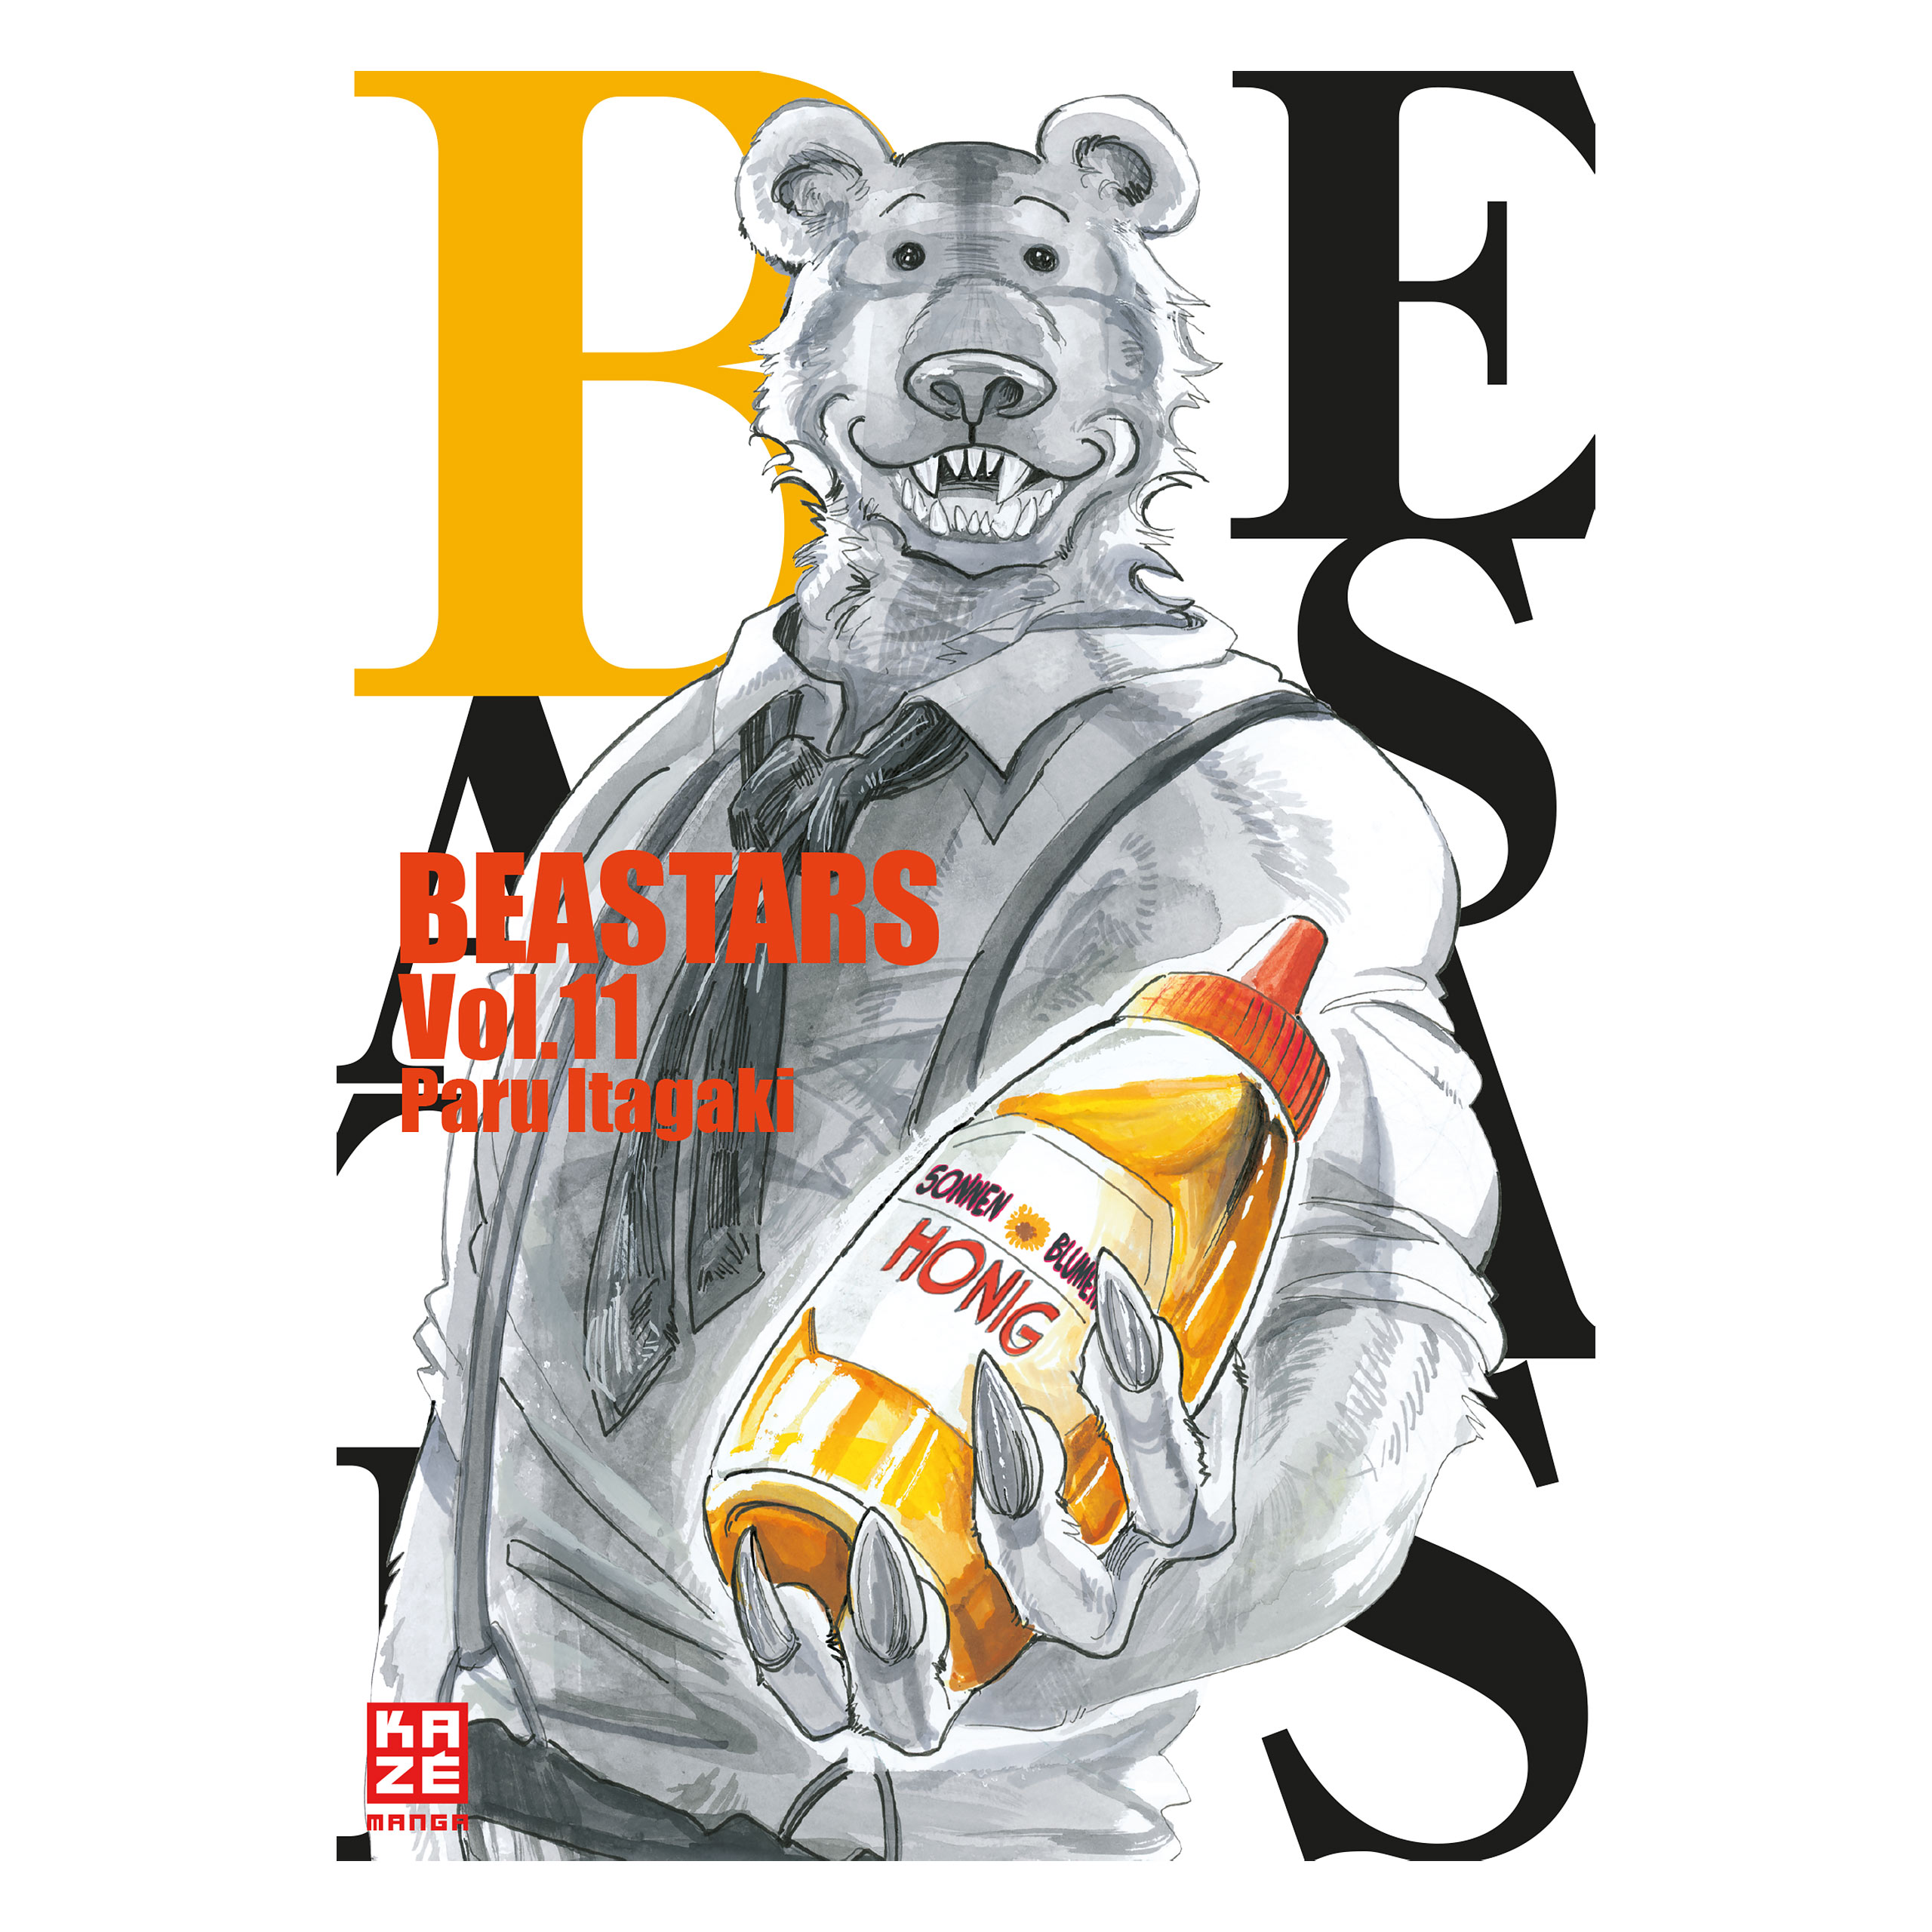 Beastars - Volume 11 Paperback